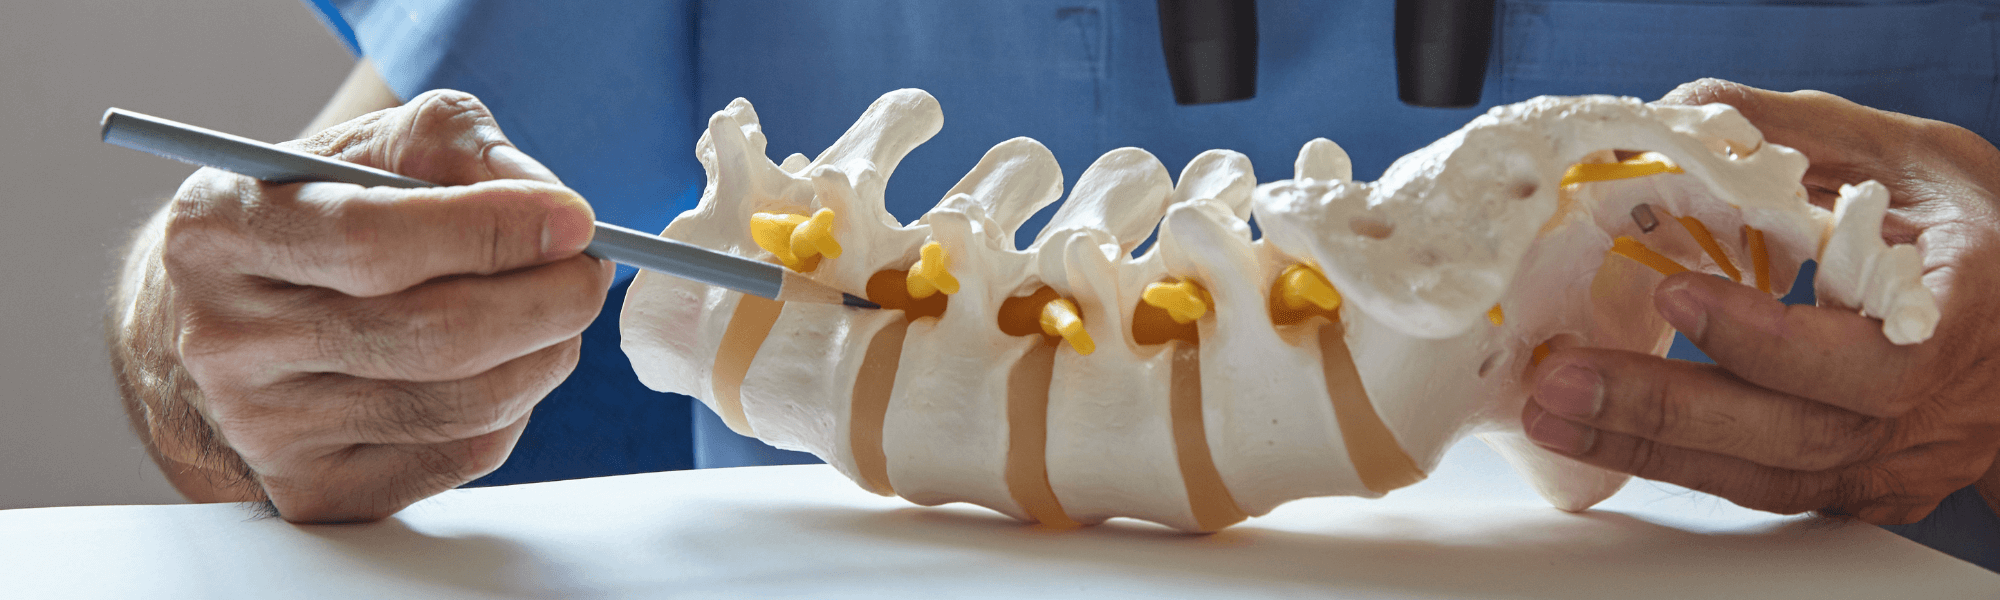 chiropractor examining spine